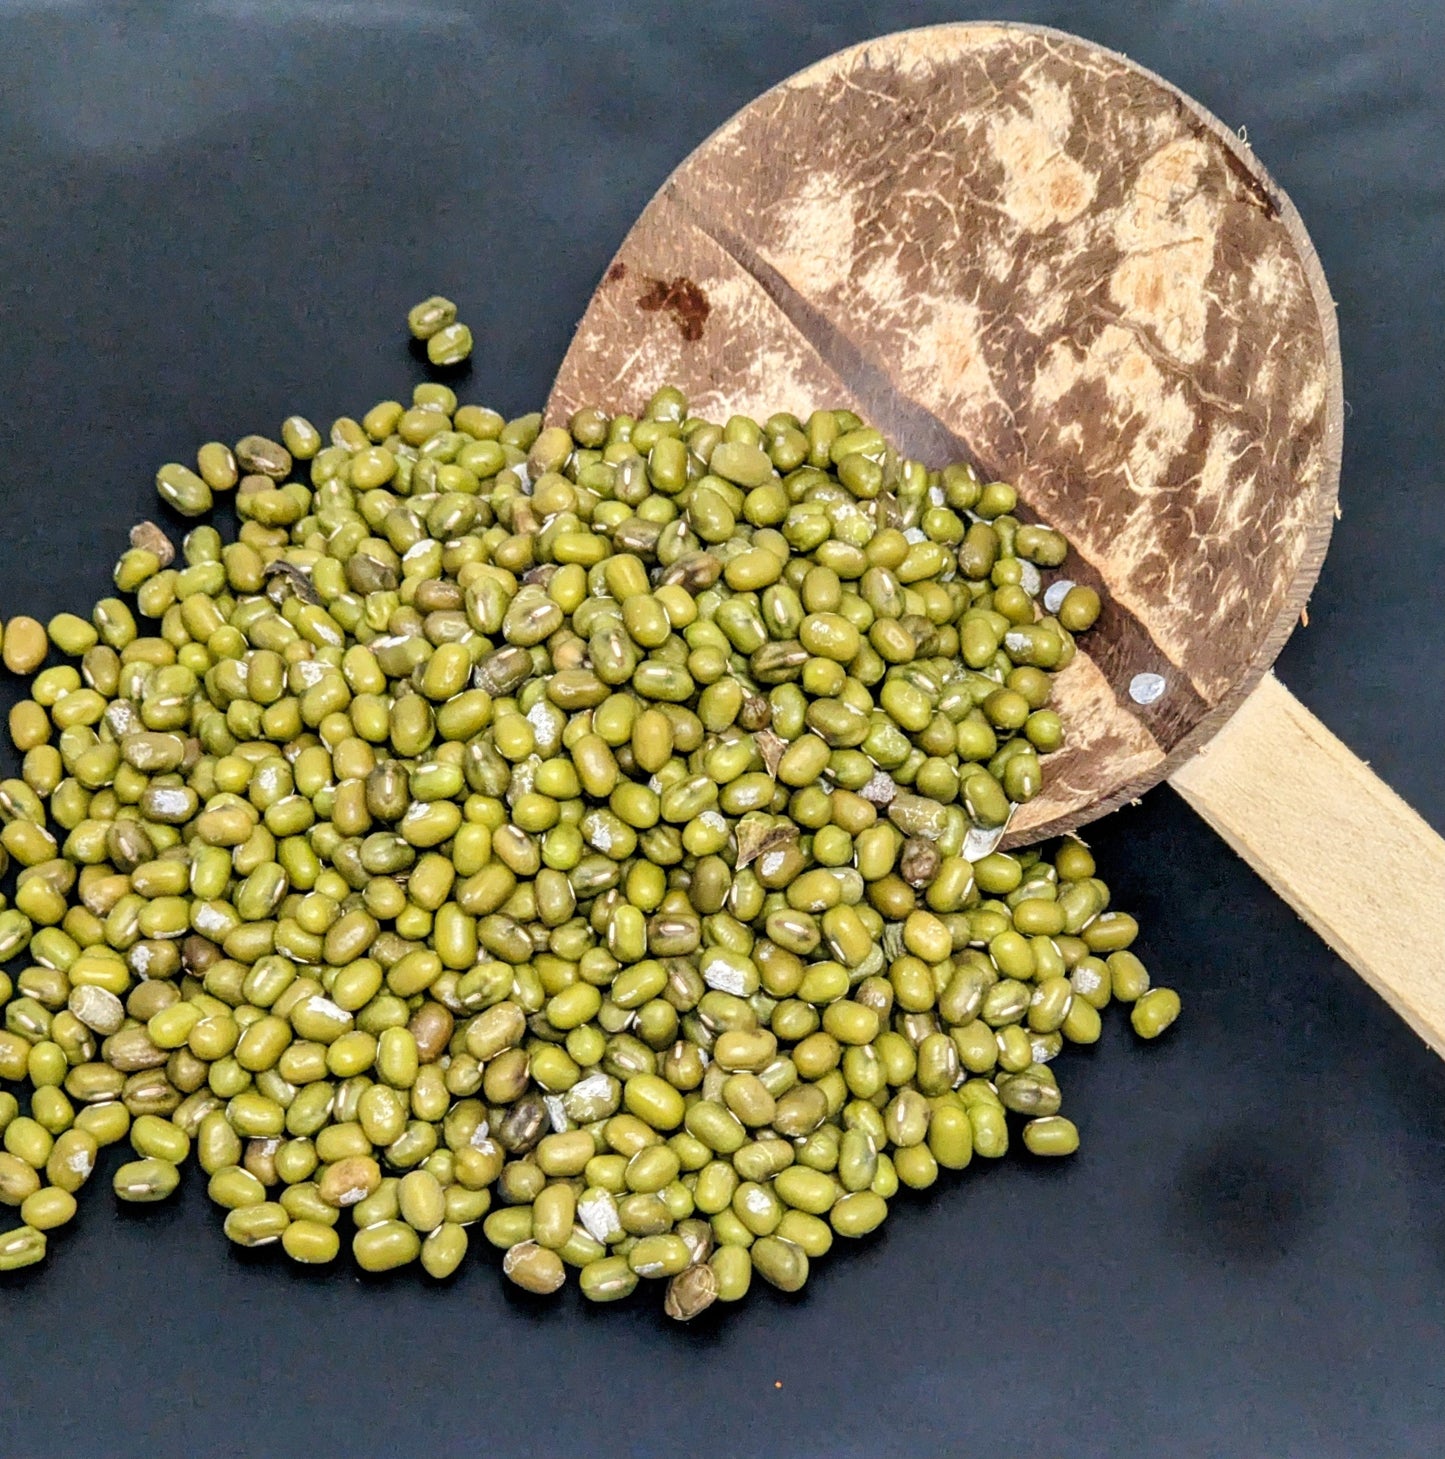 1kg+ Mung Bean for Sprouting seeds Microgreens Green Salad Healthy Organic Super Food | Ceylon  Organic-8